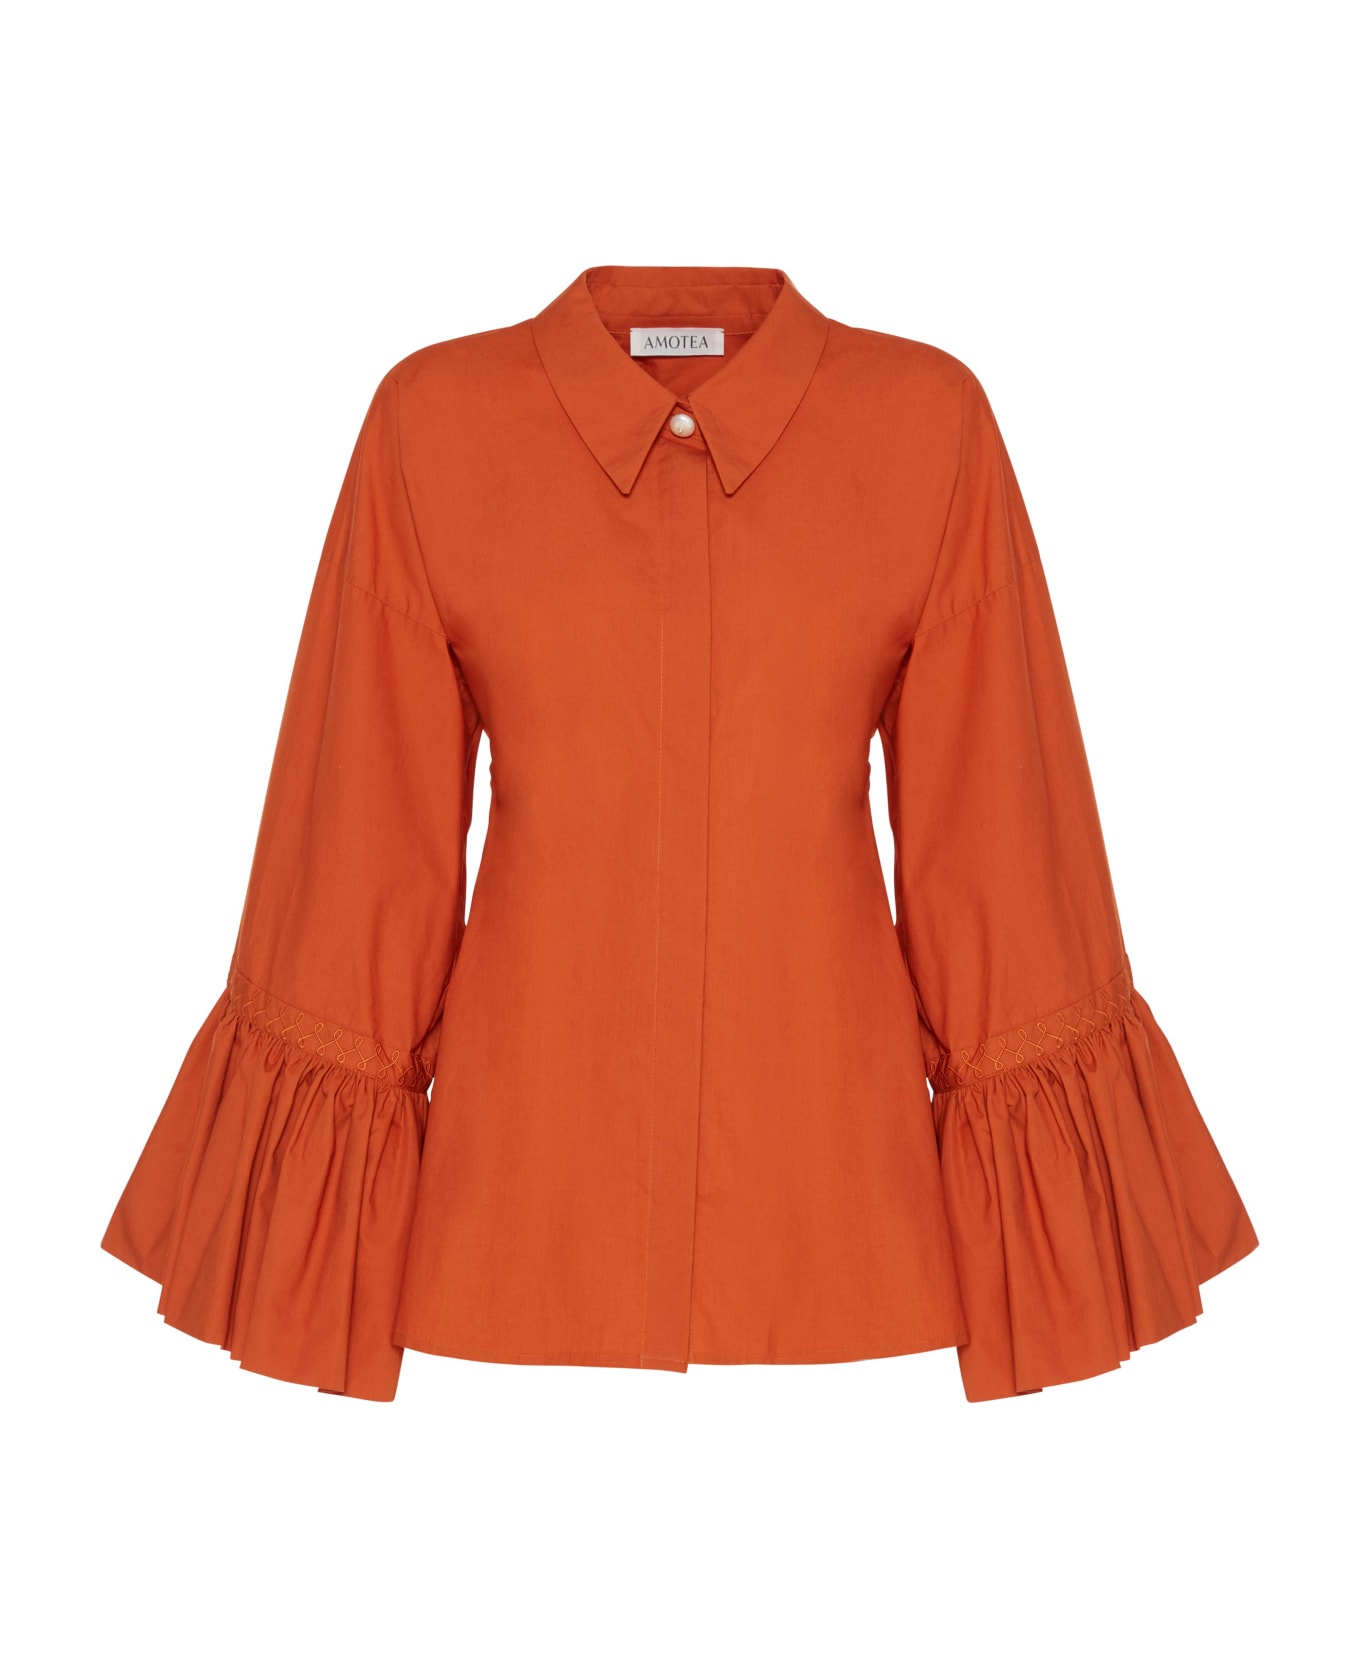 Amotea Claudia Shirt In Orange Poplin - Orange